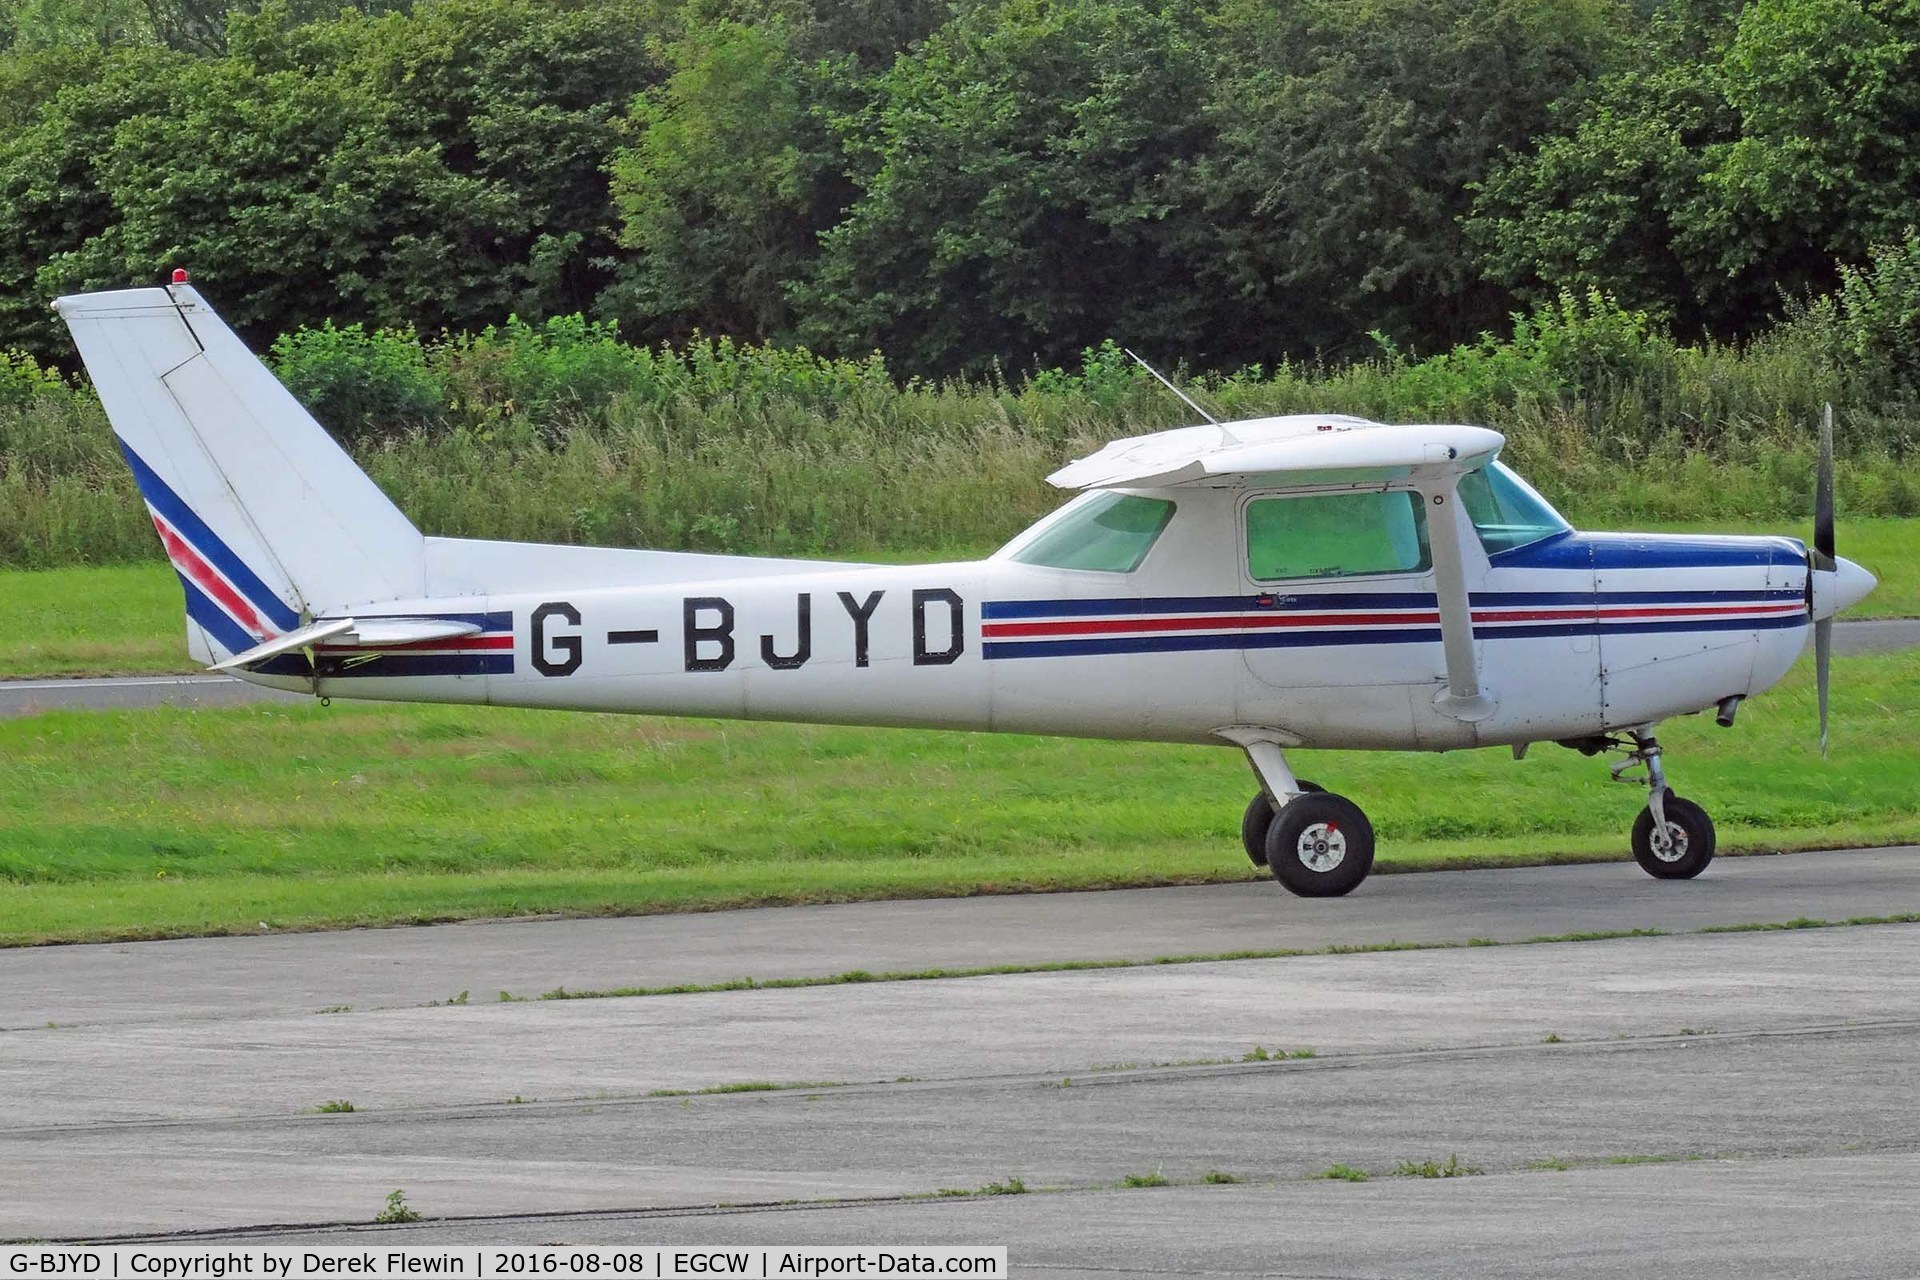 G-BJYD, 1982 Reims F152 C/N 1915, F152, Welshpool based, seen aprked up.